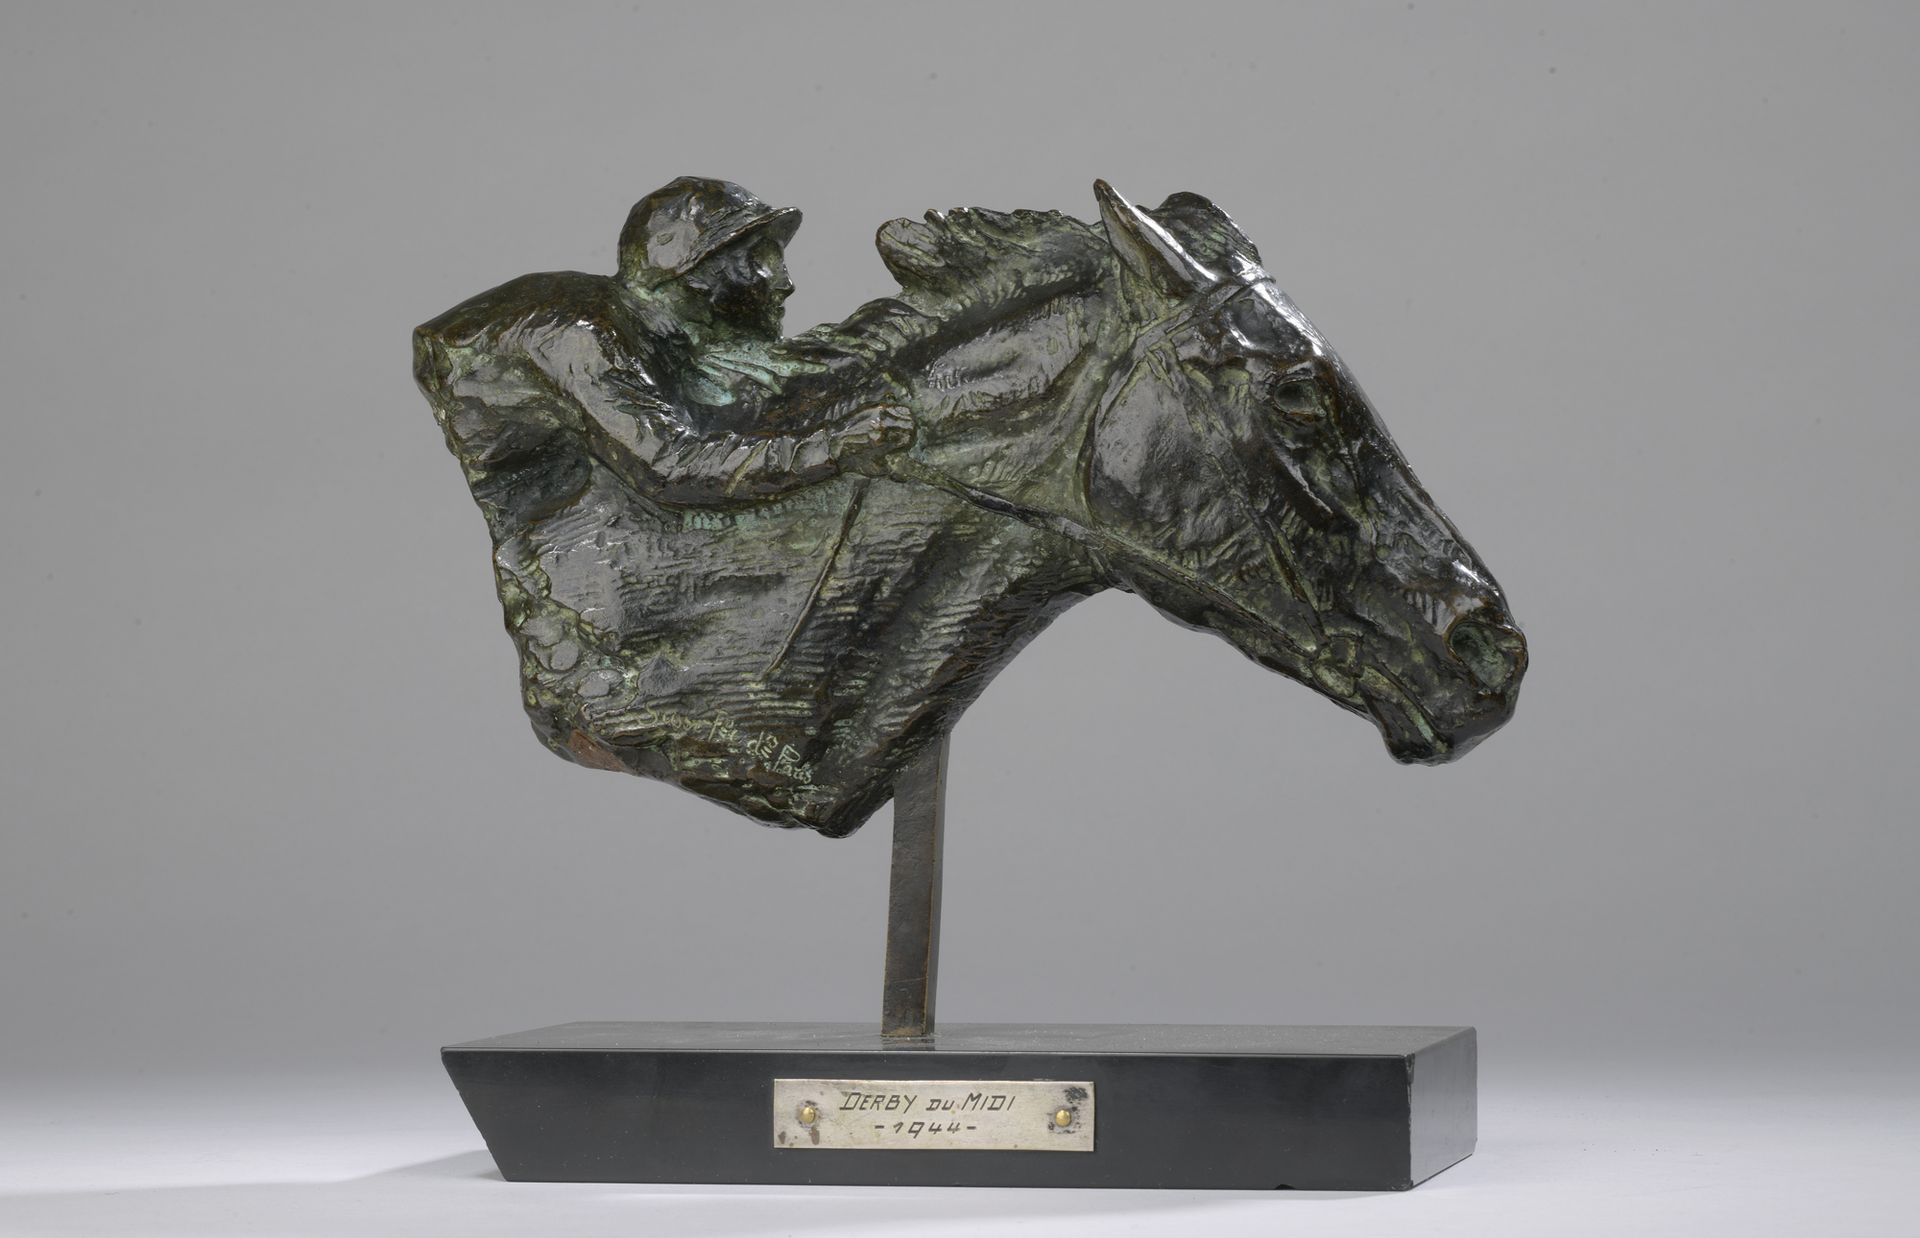 Null 罗杰-戈德肖(1878-1958)

米迪德比，1944年

青铜，带有棕绿色的铜锈。

签名为Roger GODCHAUX，有创始人Susse Fr&hellip;